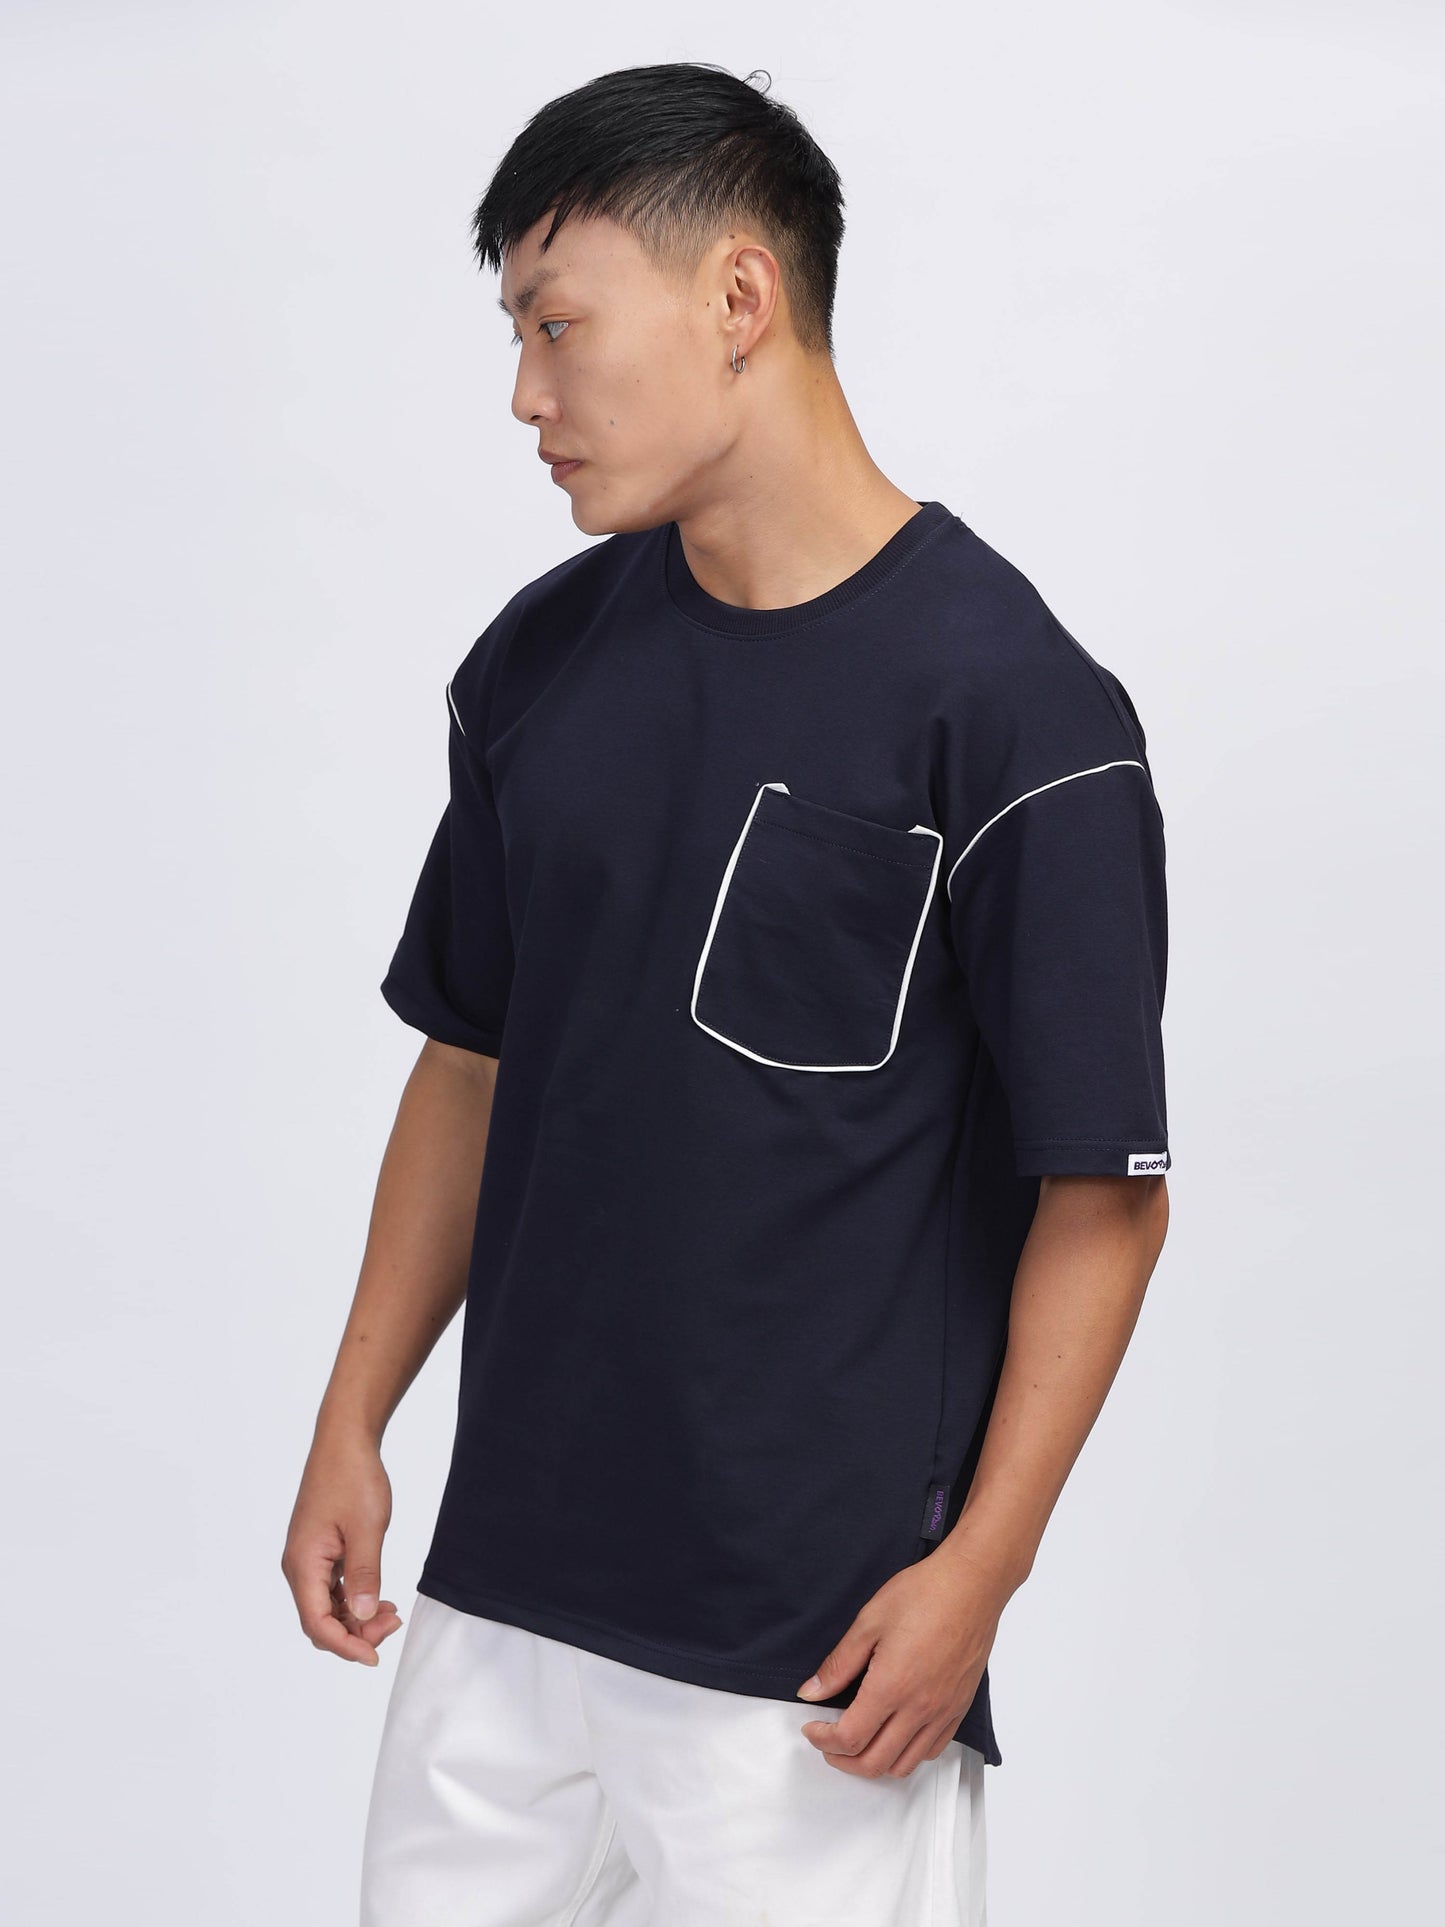 Contrast Stitch Navy Blue Drop Shoulder T-Shirt